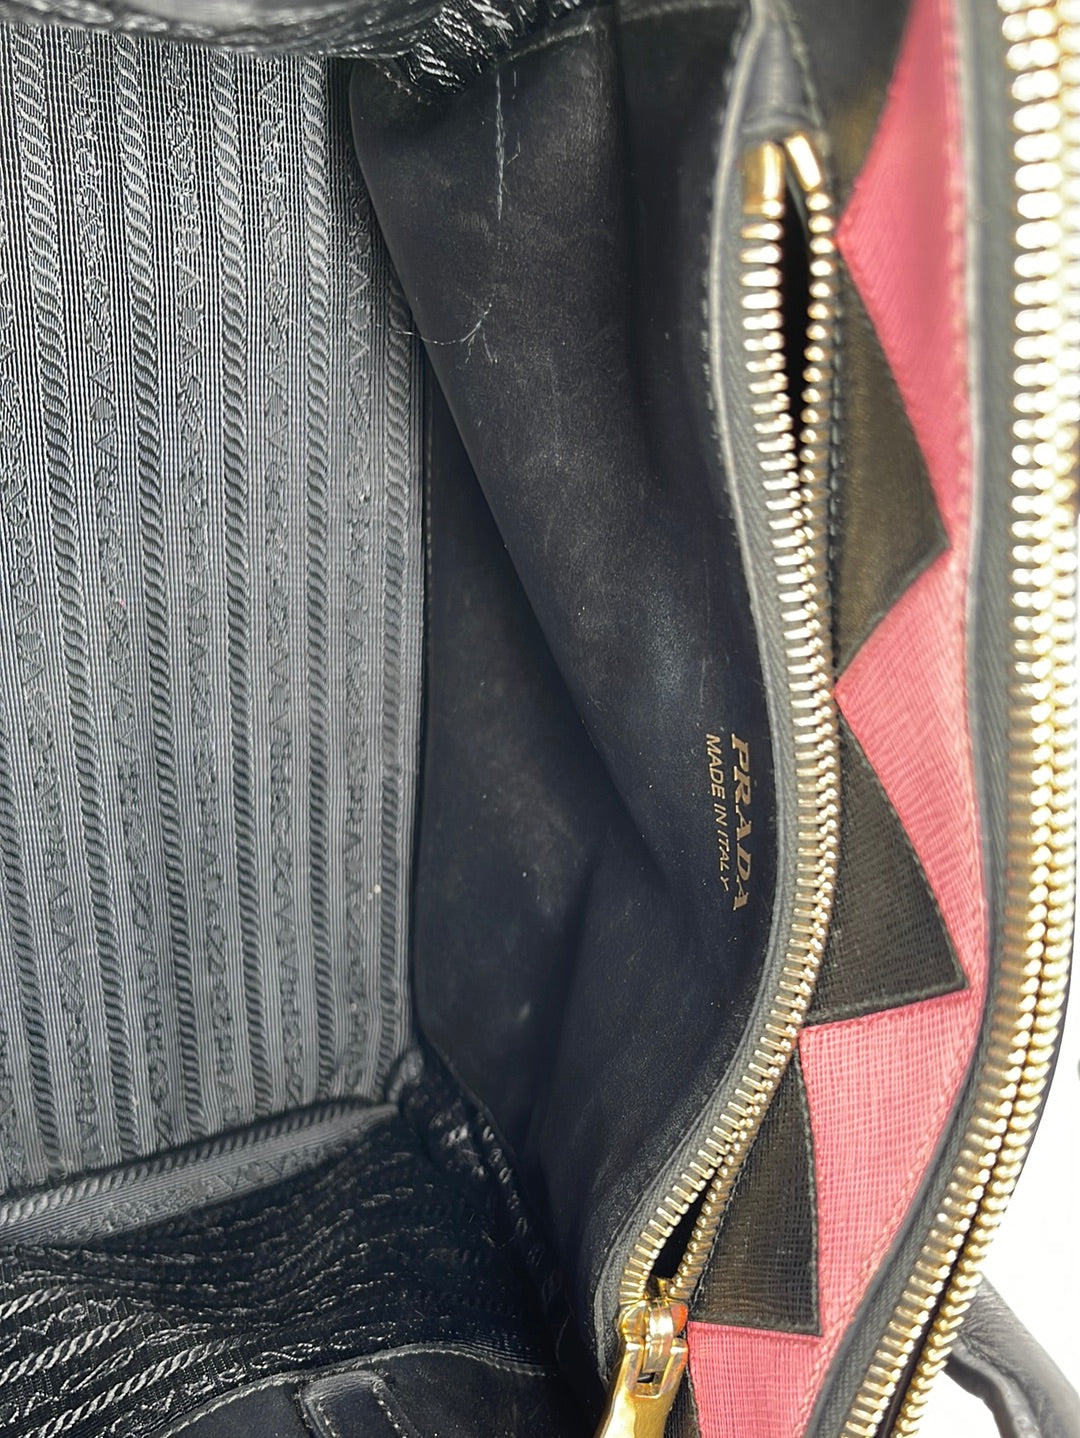 NWT AUTHENTIC Prada Galleria Saffiano Leather Double Zip Bag